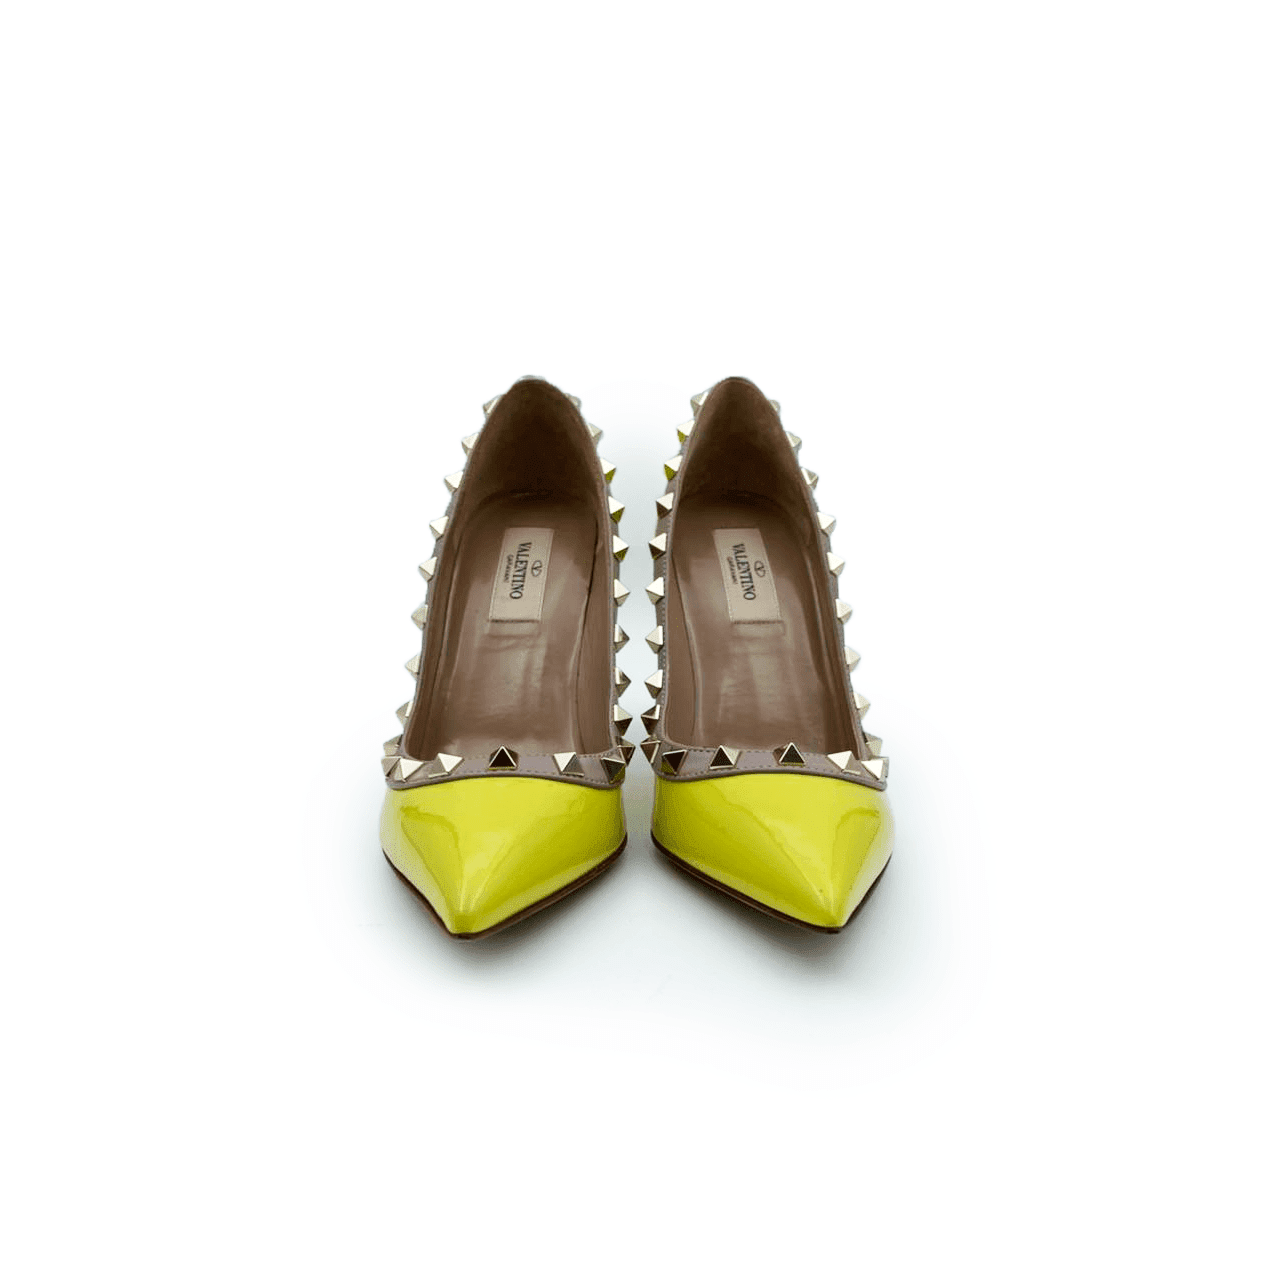 Valentino Garavani Yellow Patent Leather Pumps Heels